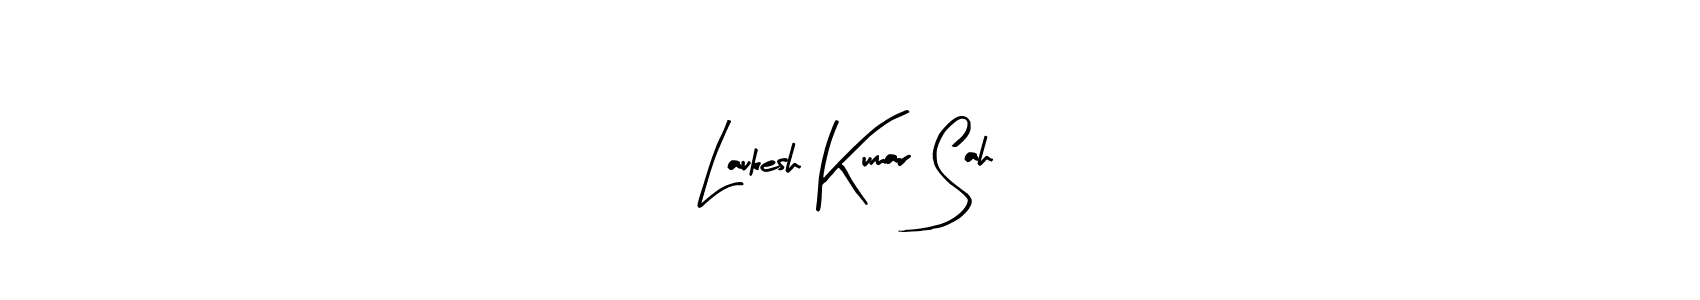 Make a beautiful signature design for name Laukesh Kumar Sah. Use this online signature maker to create a handwritten signature for free. Laukesh Kumar Sah signature style 8 images and pictures png